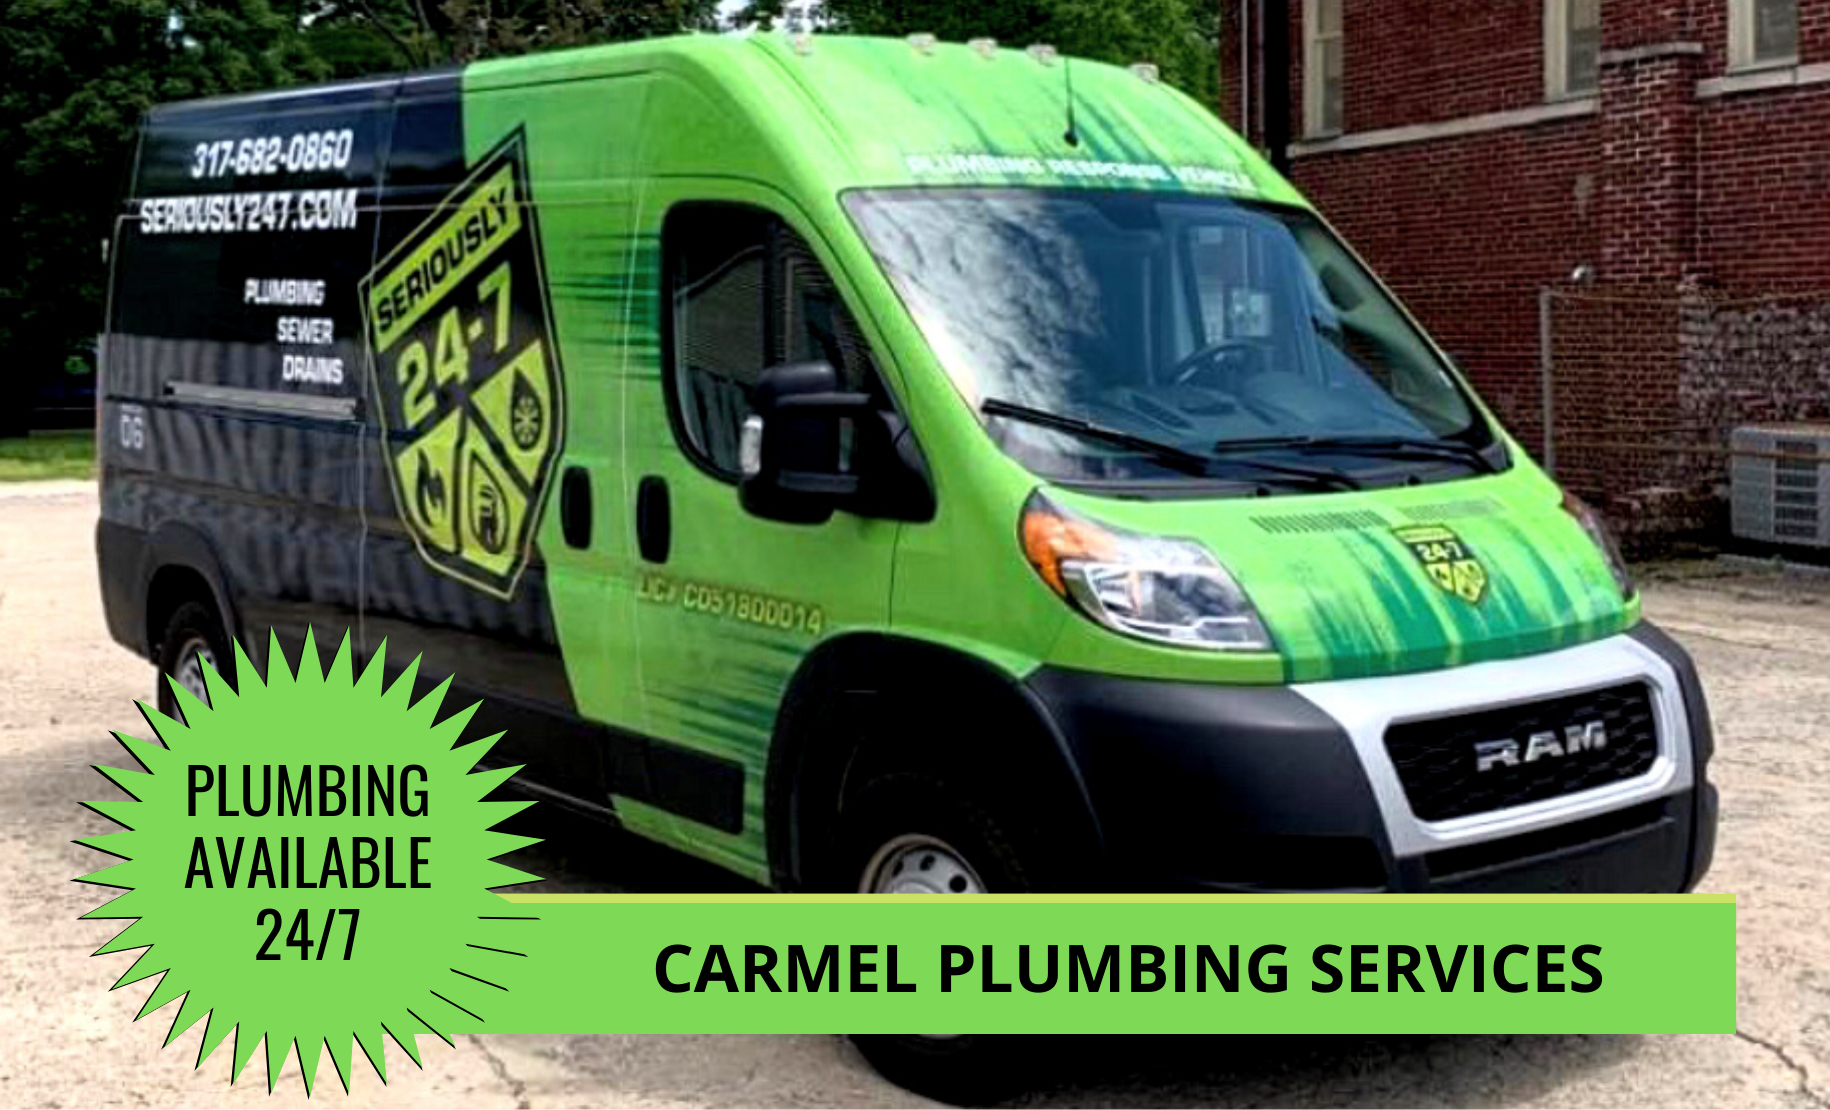 Carmel Plumbing Services